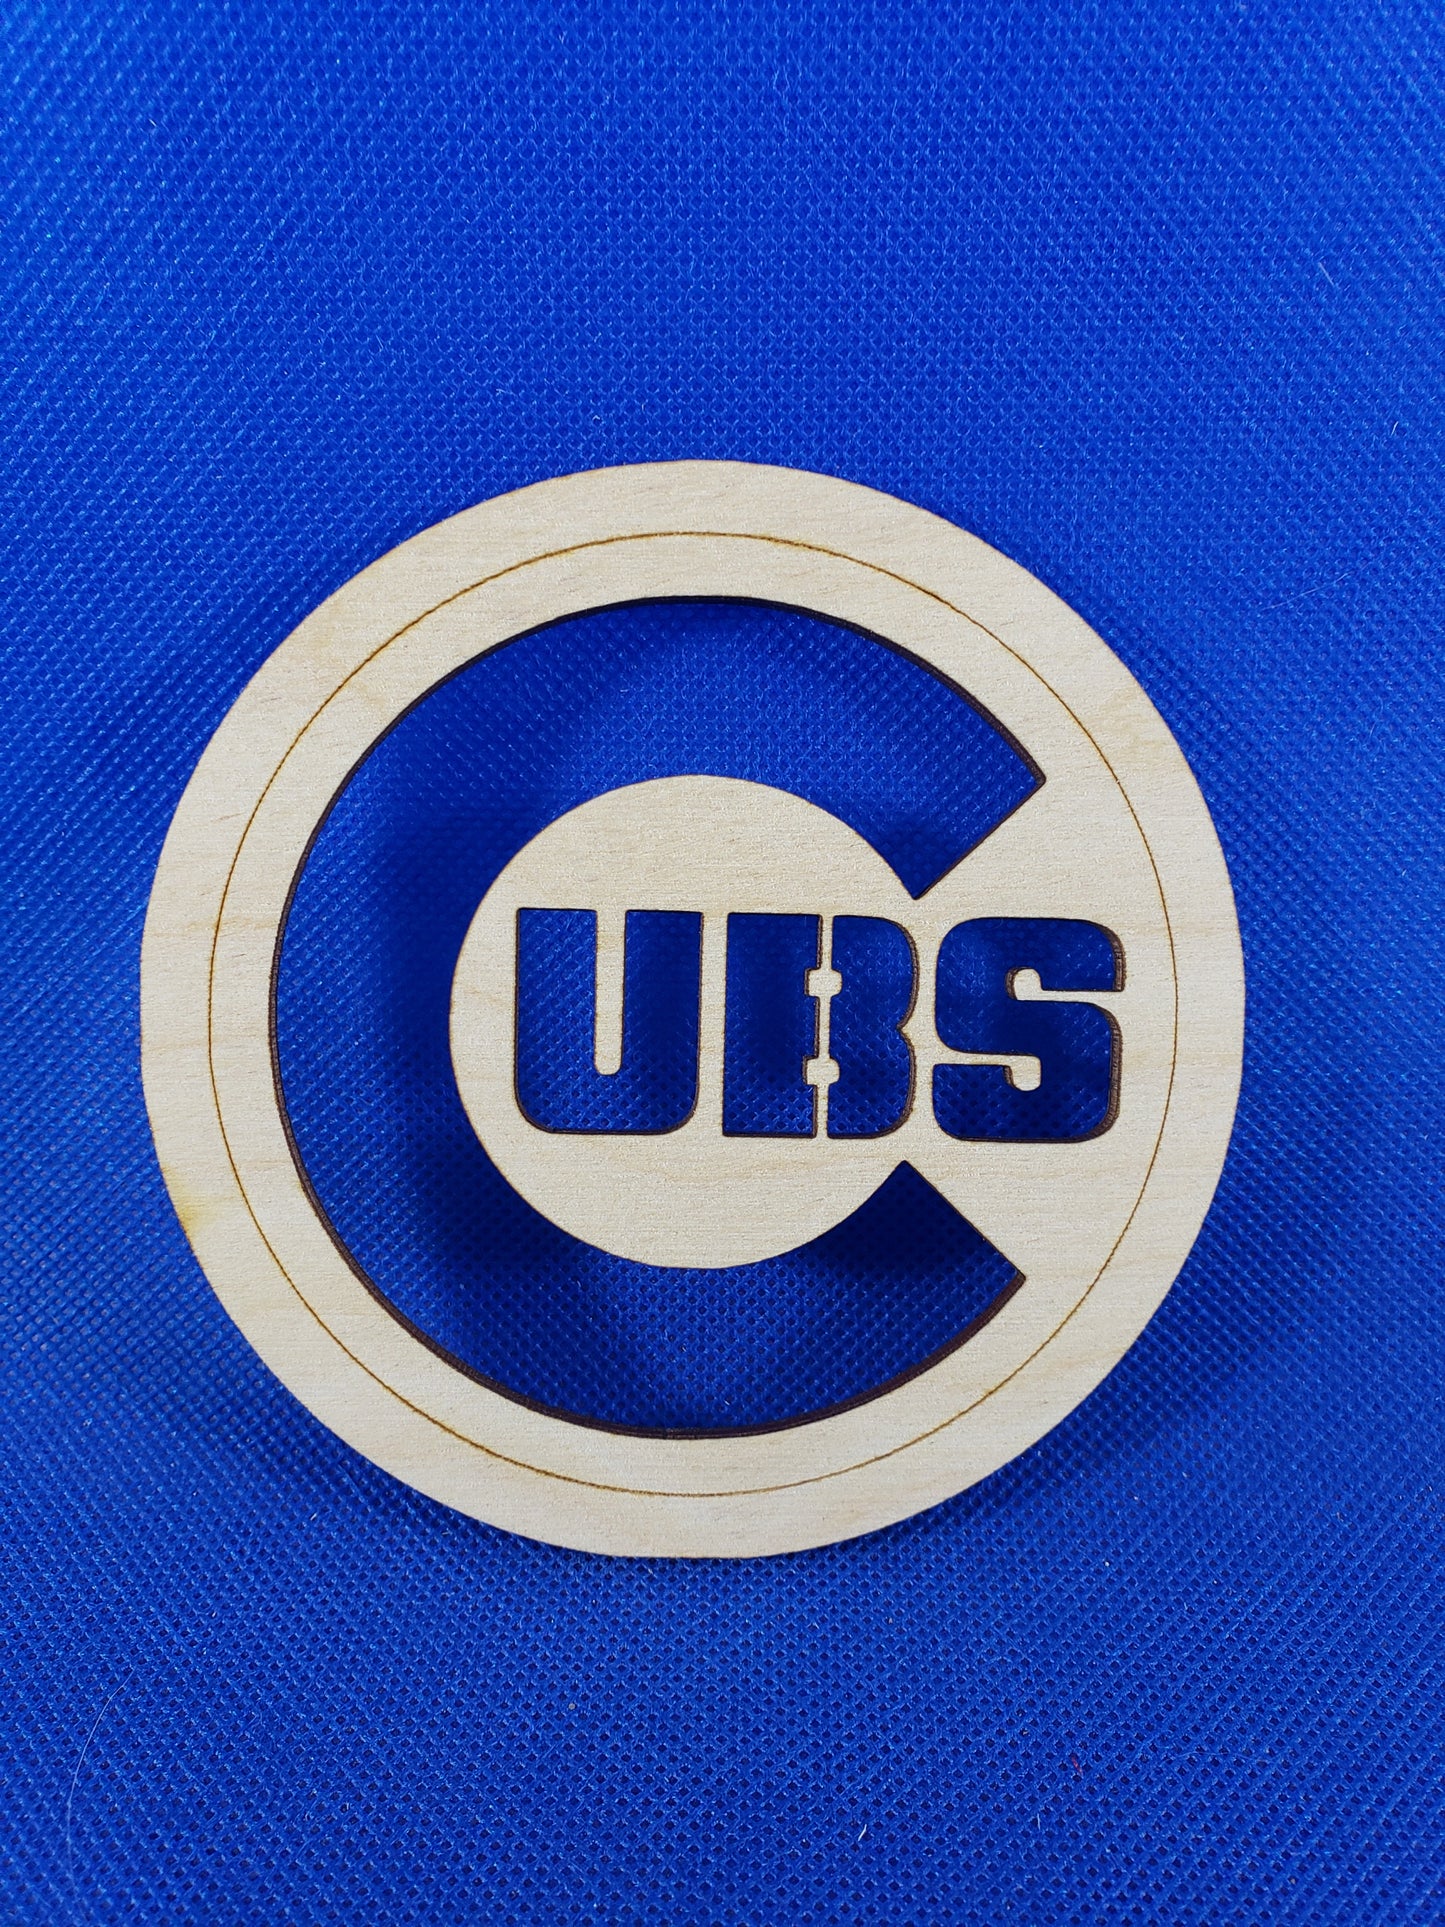 Chicago Cubs - Laser cut natural wooden blanks